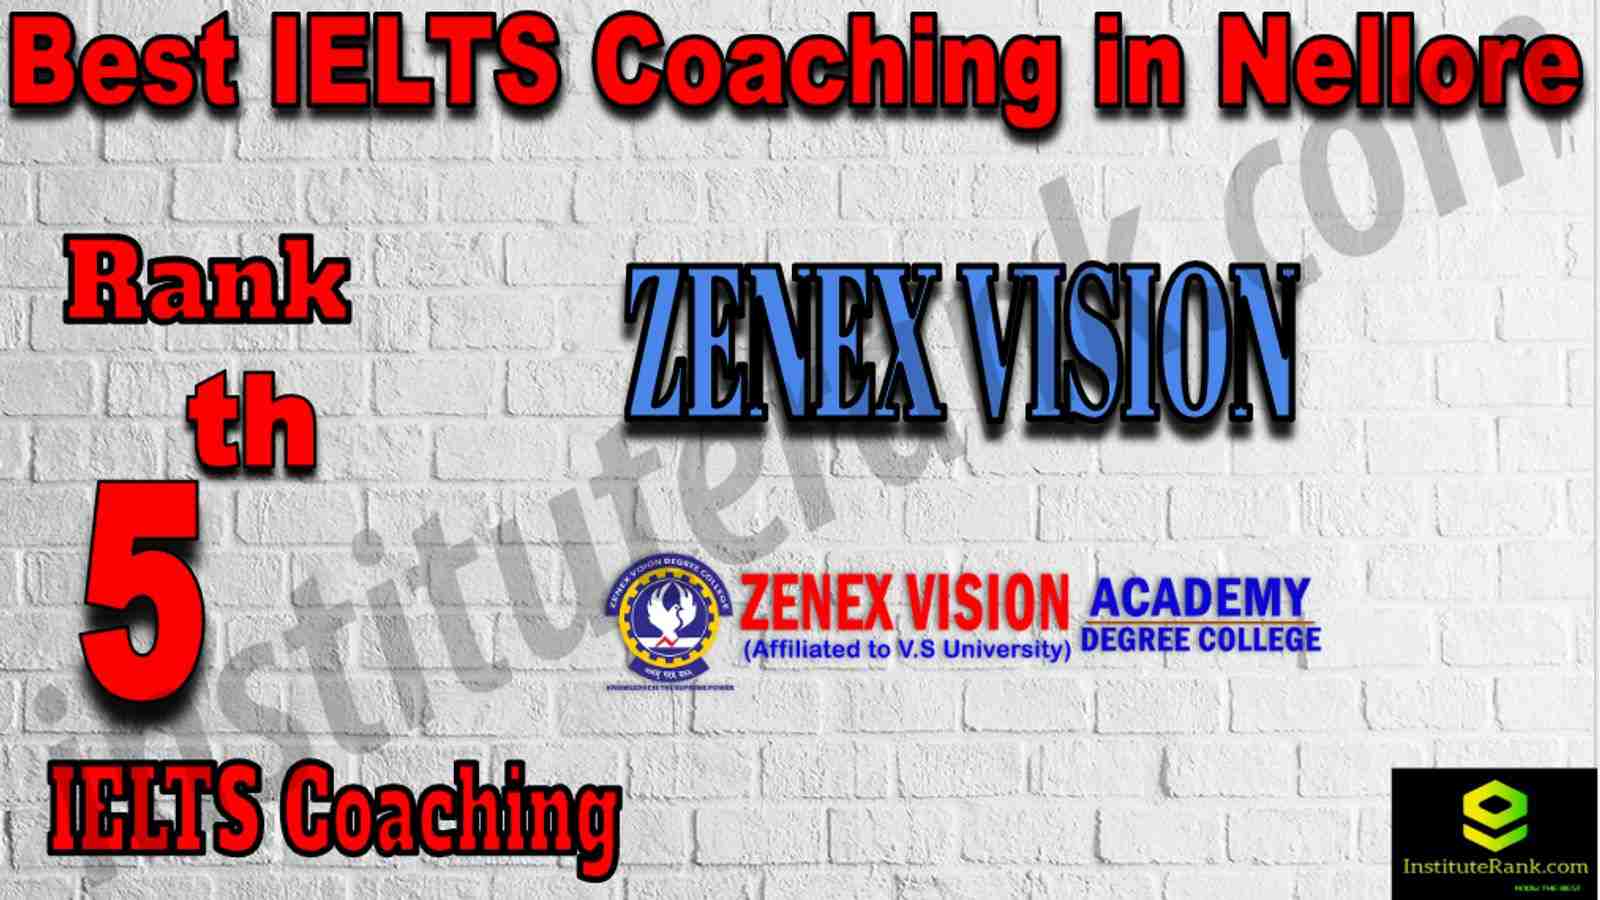 5th Best IELTS Coaching in Nellore